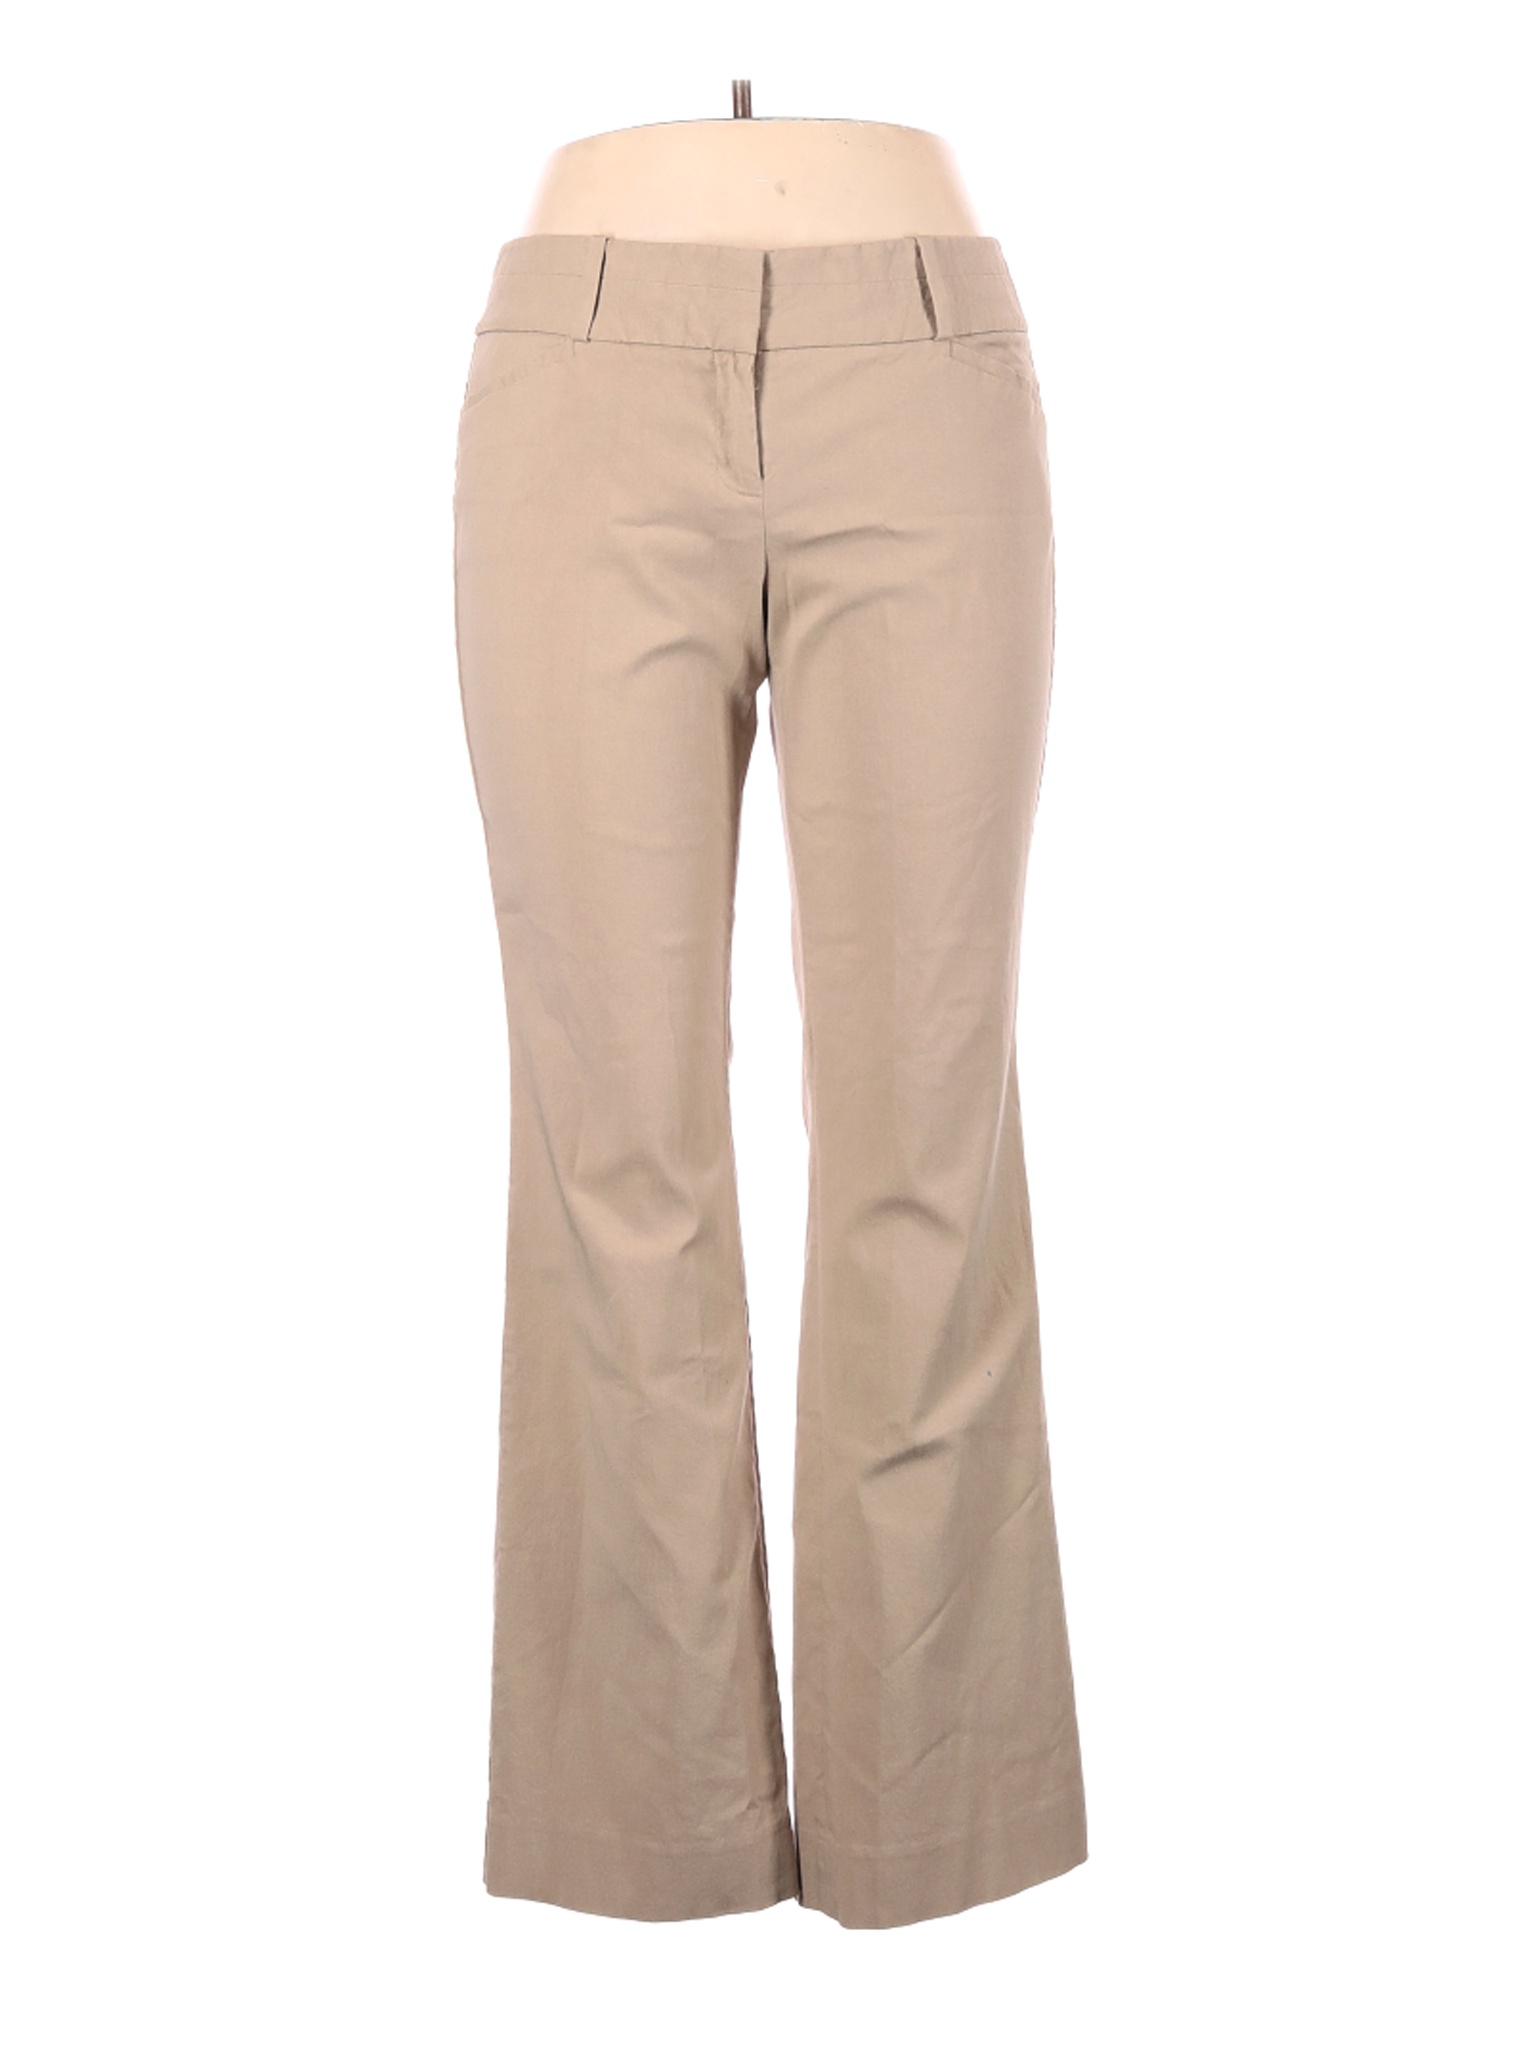 The Limited Women Brown Dress Pants 14 | eBay